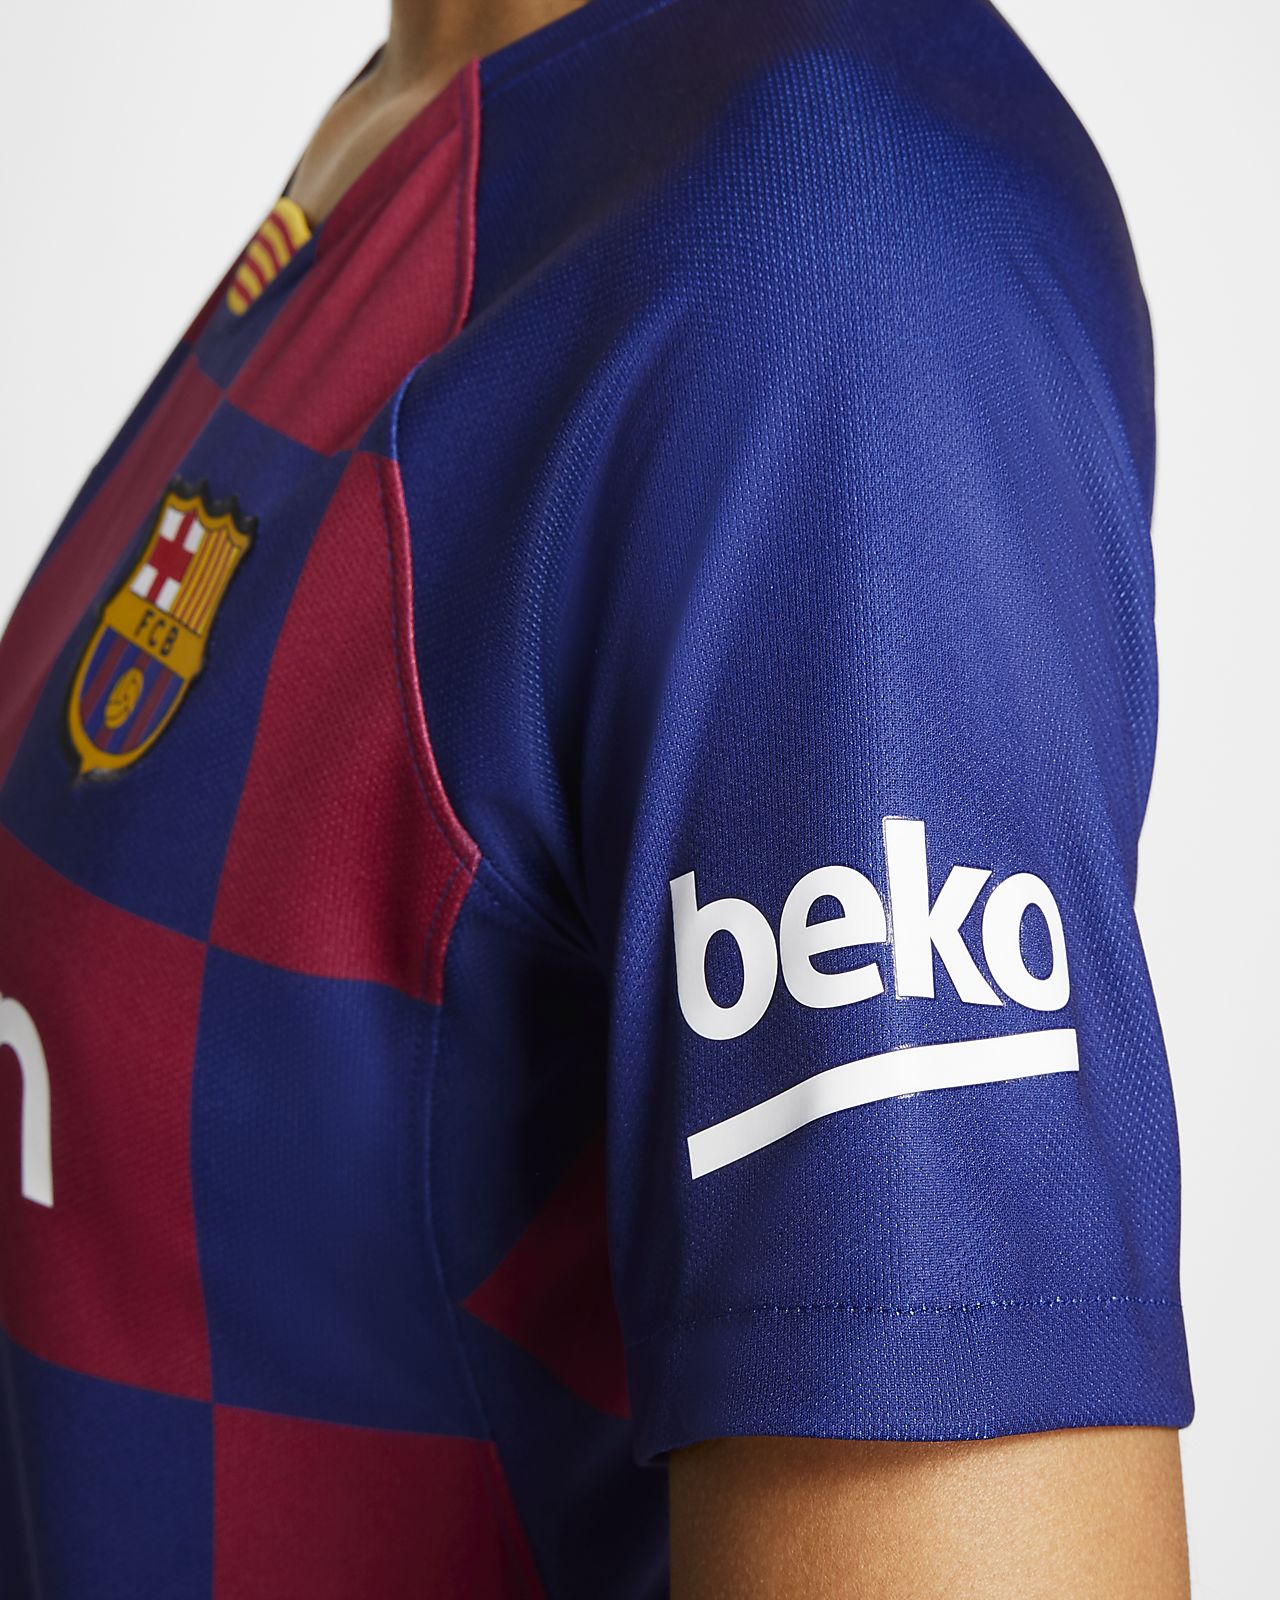 fc barcelona home jersey 2019